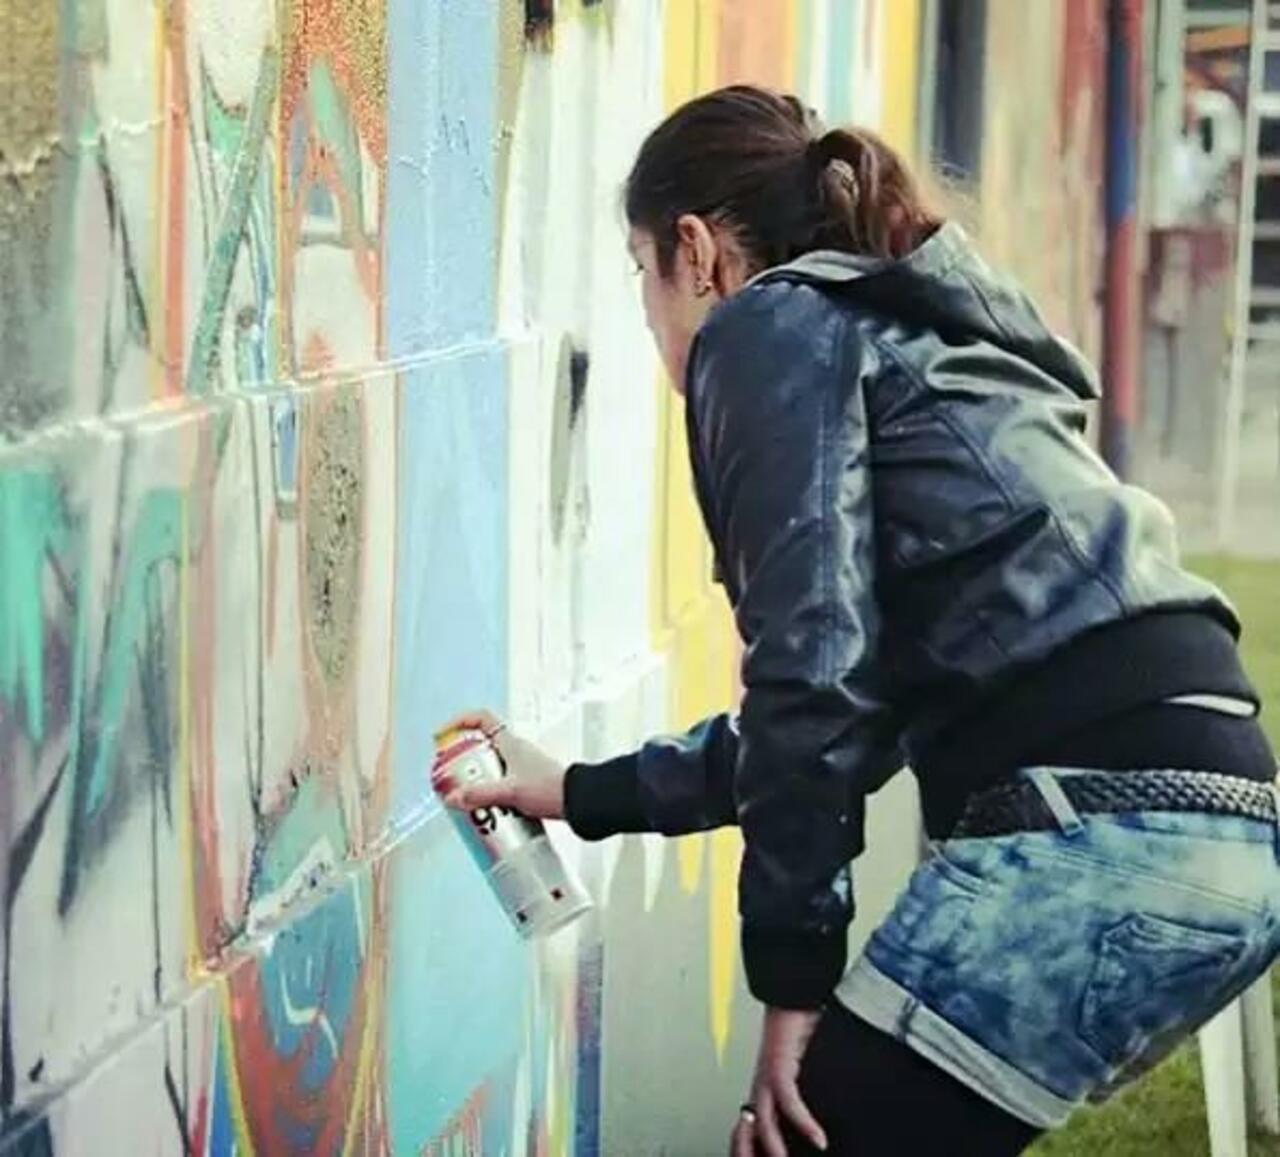 #streetart #graffiti #spraypaint #muralfestival #mural http://t.co/ubsybsfMel